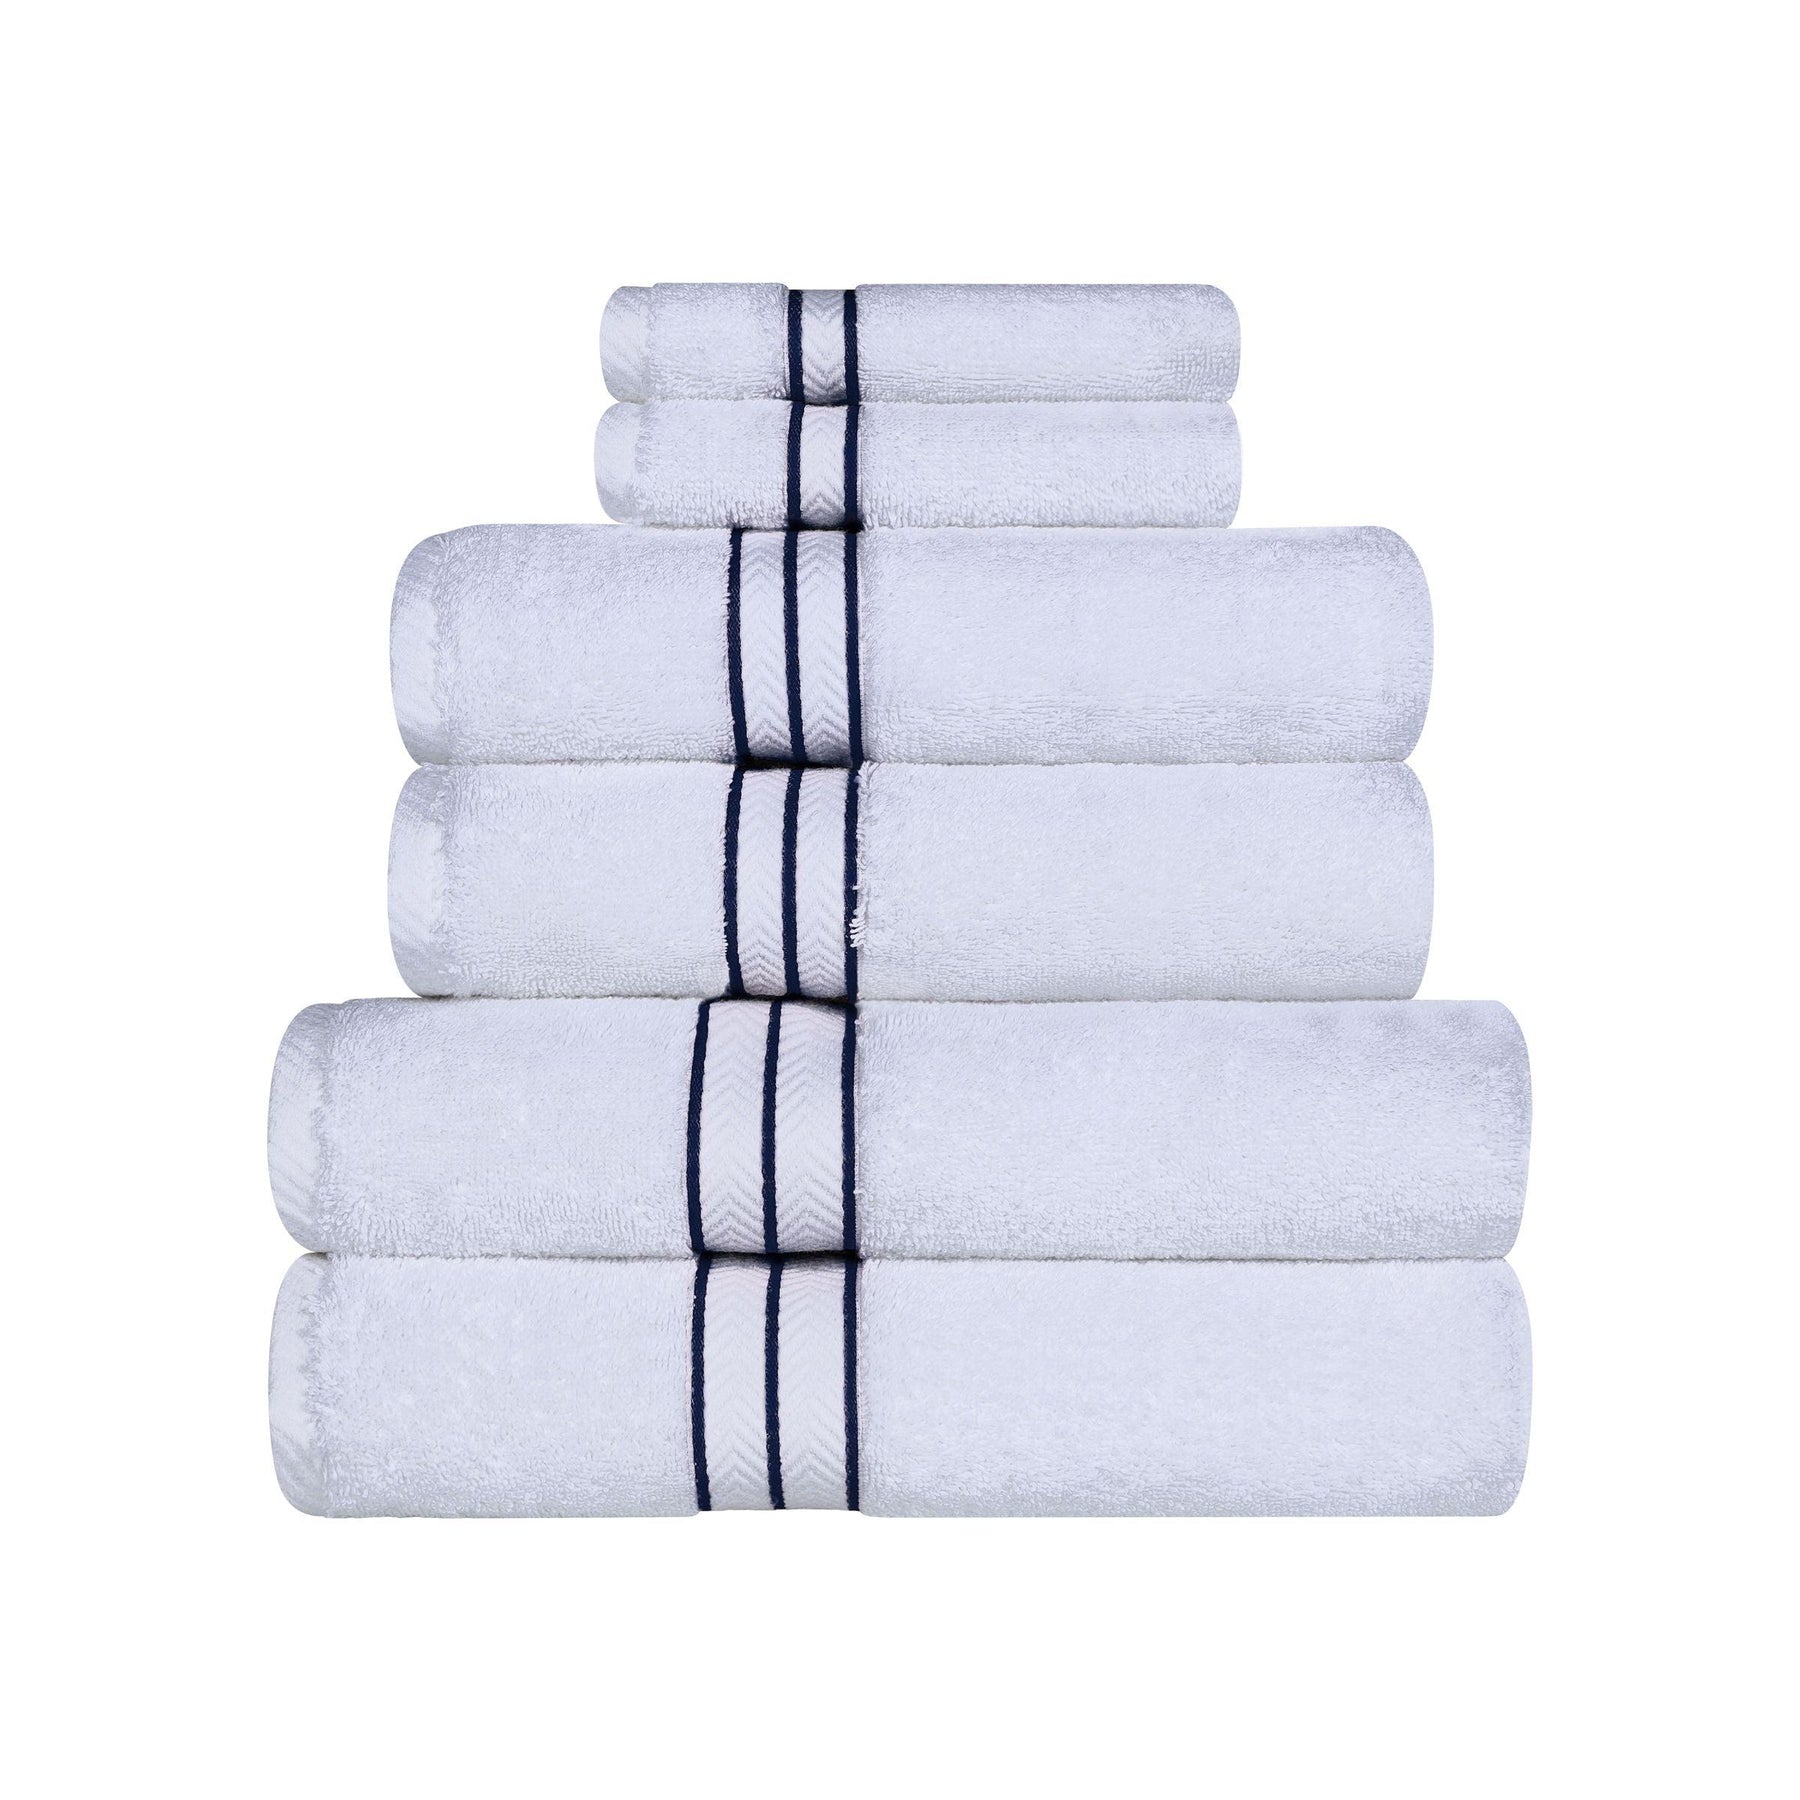 Turkish Cotton Heavyweight Ultra-Plush 6 Piece Bath Towel Set - White/navy Blue